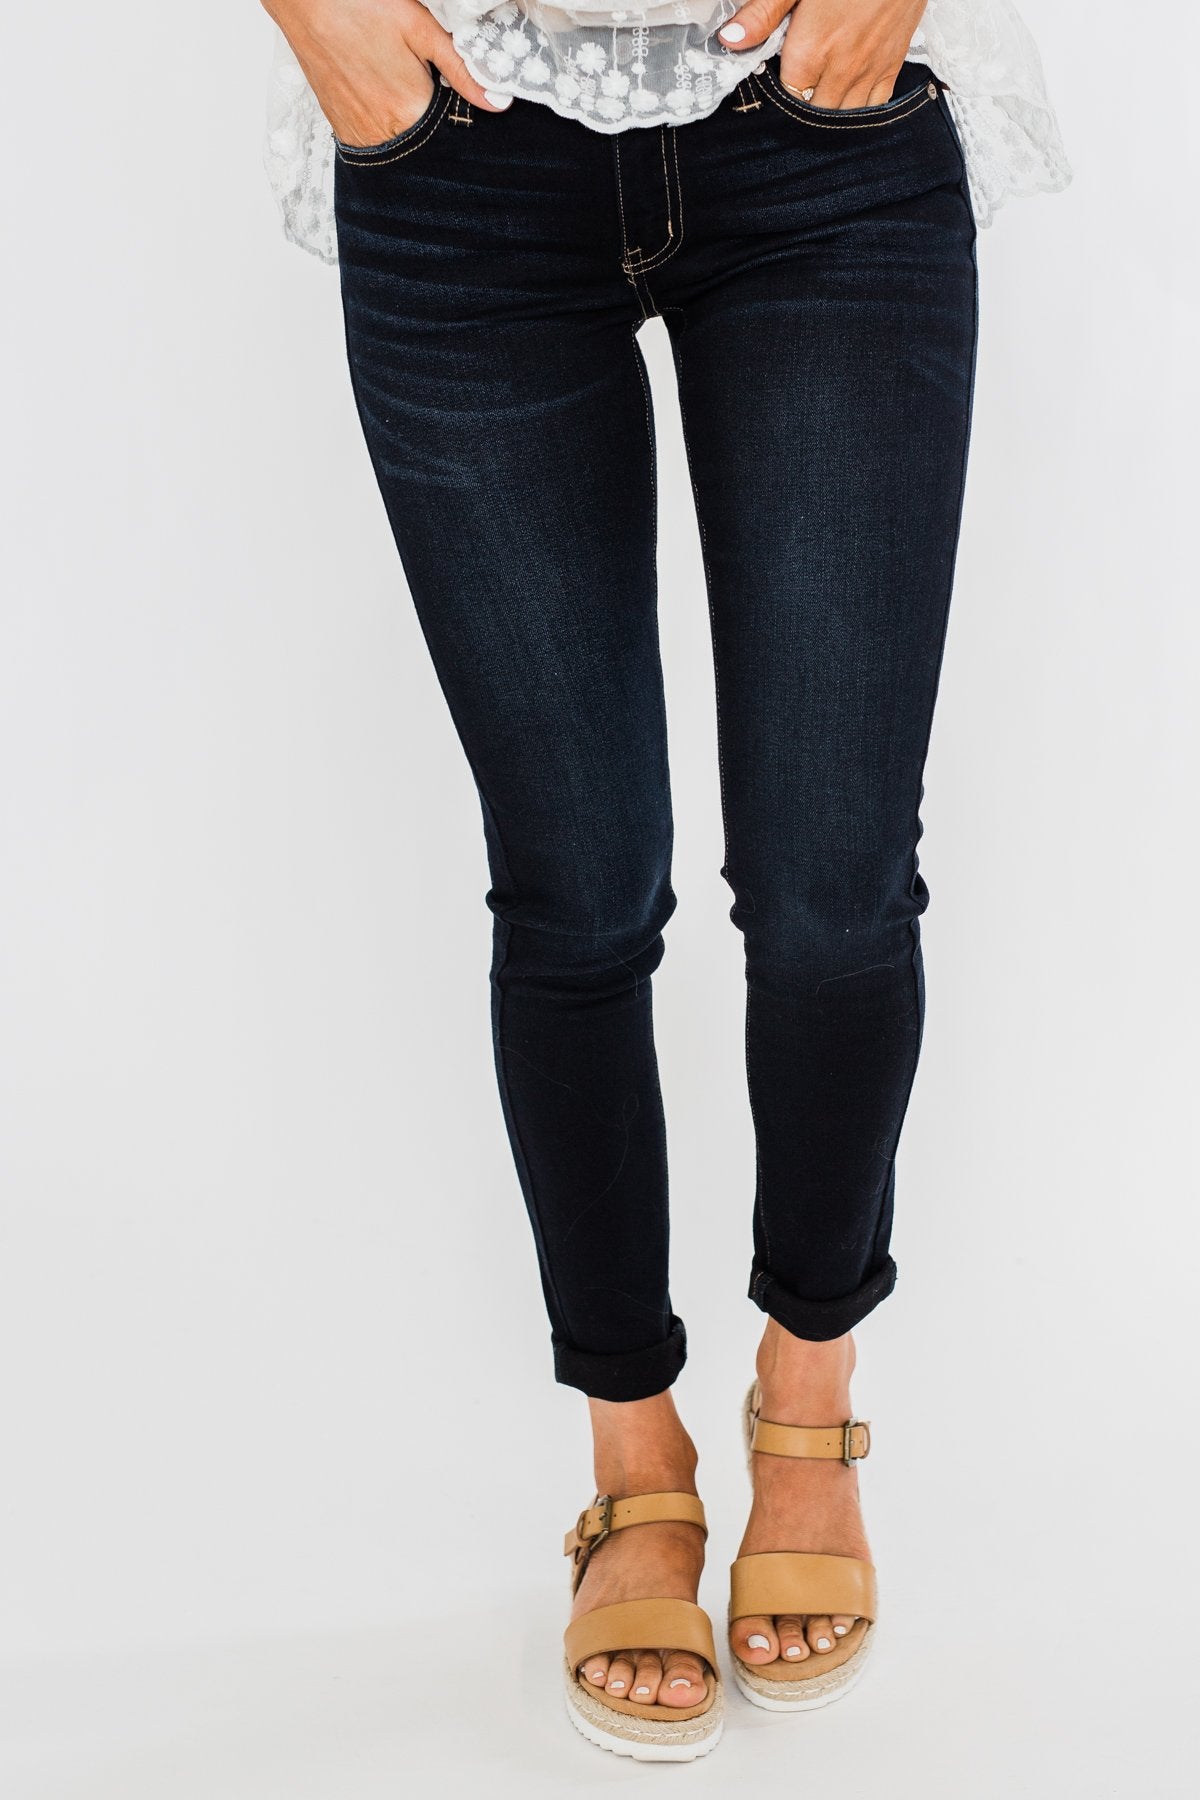 KanCan Skinny Jeans- Joanna Wash